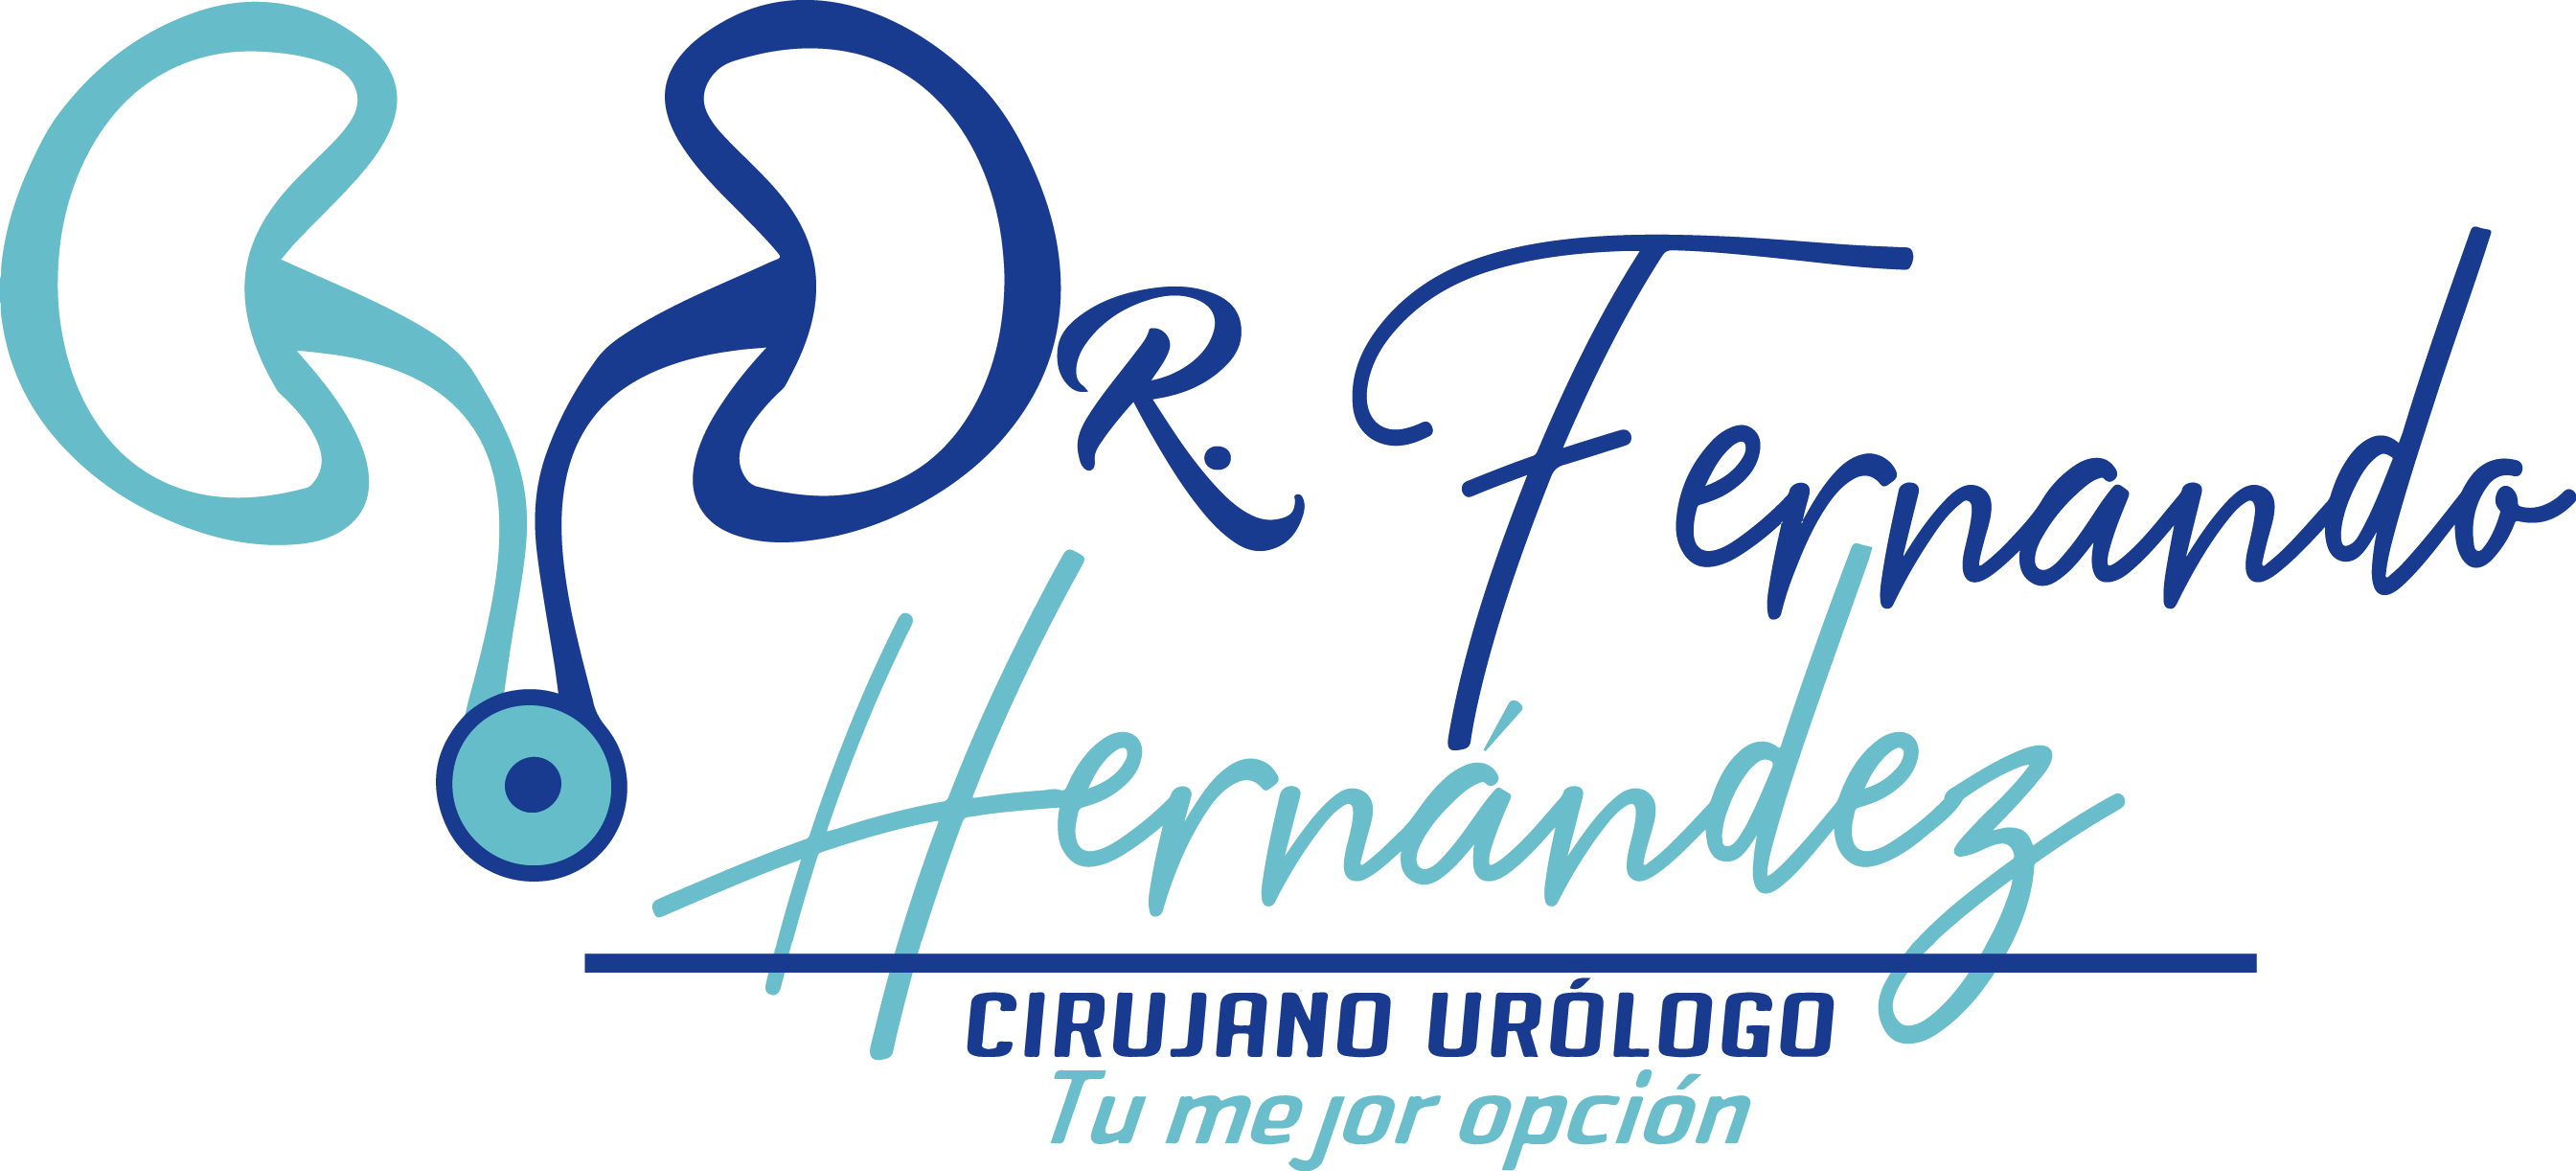 Dr. Fernando Hernández